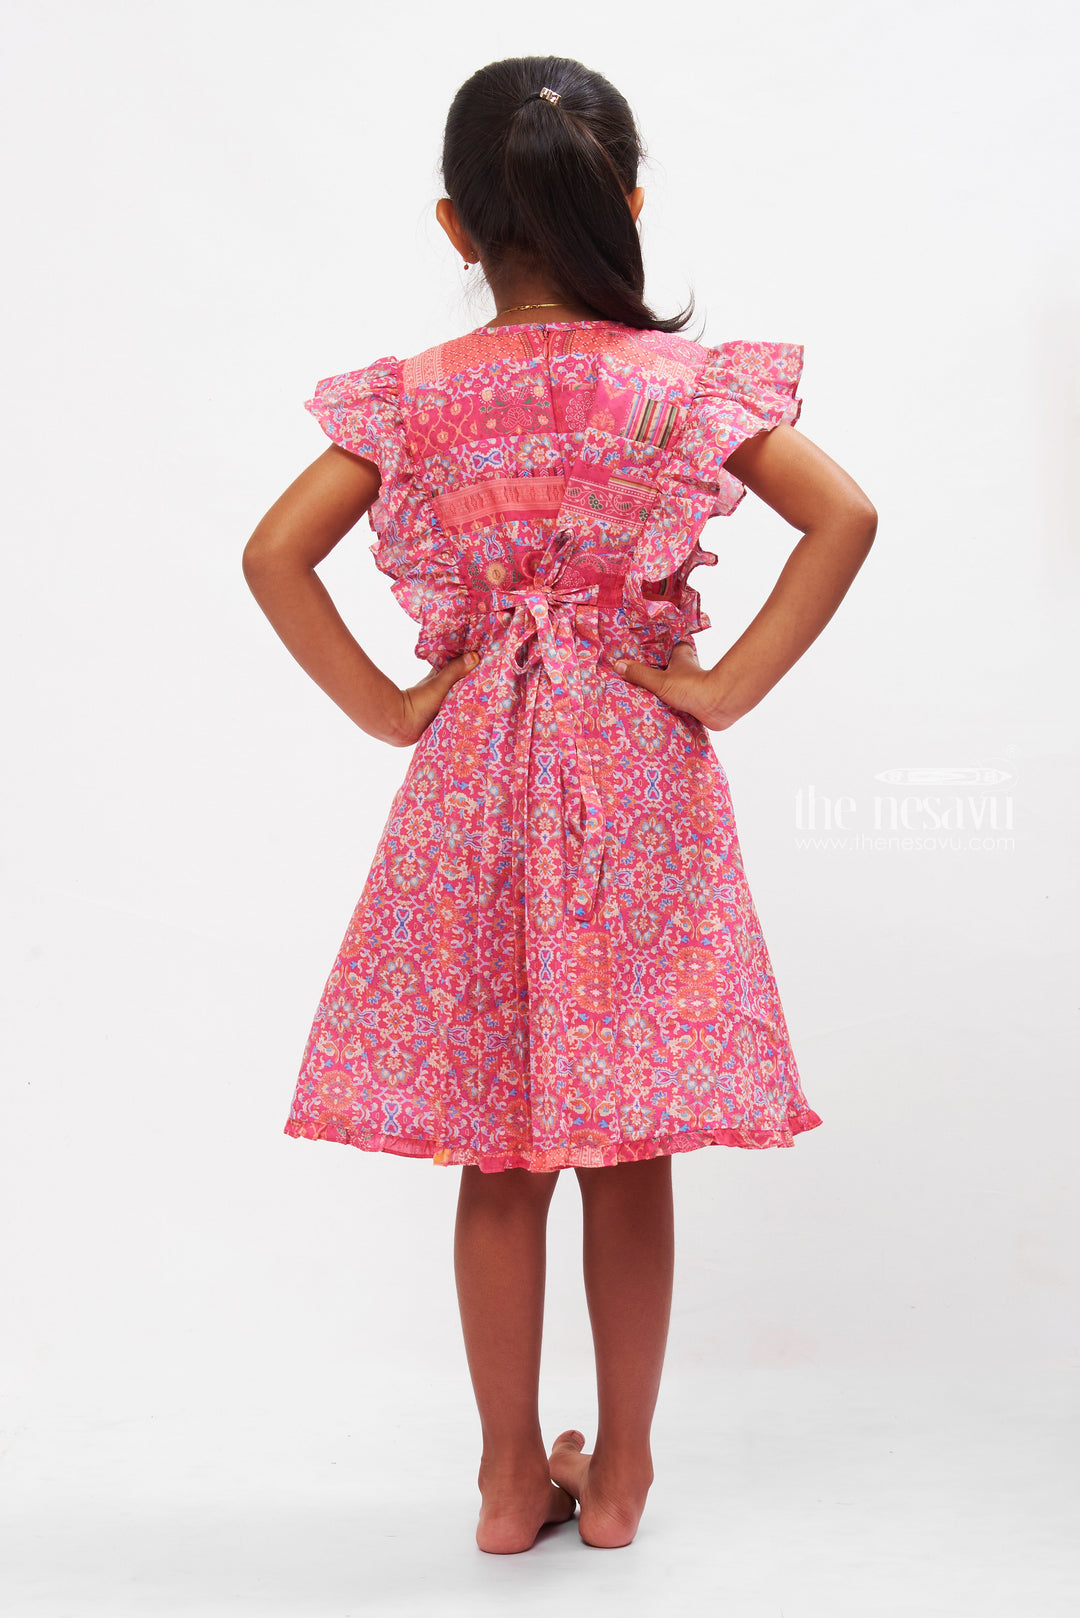 The Nesavu Girls Cotton Frock Vibrant Pink Smocked Cotton Frock for Girls with Traditional Print Nesavu Girls Summer Cotton Dress Essentials | Pink Smocked Frock | The Nesavu